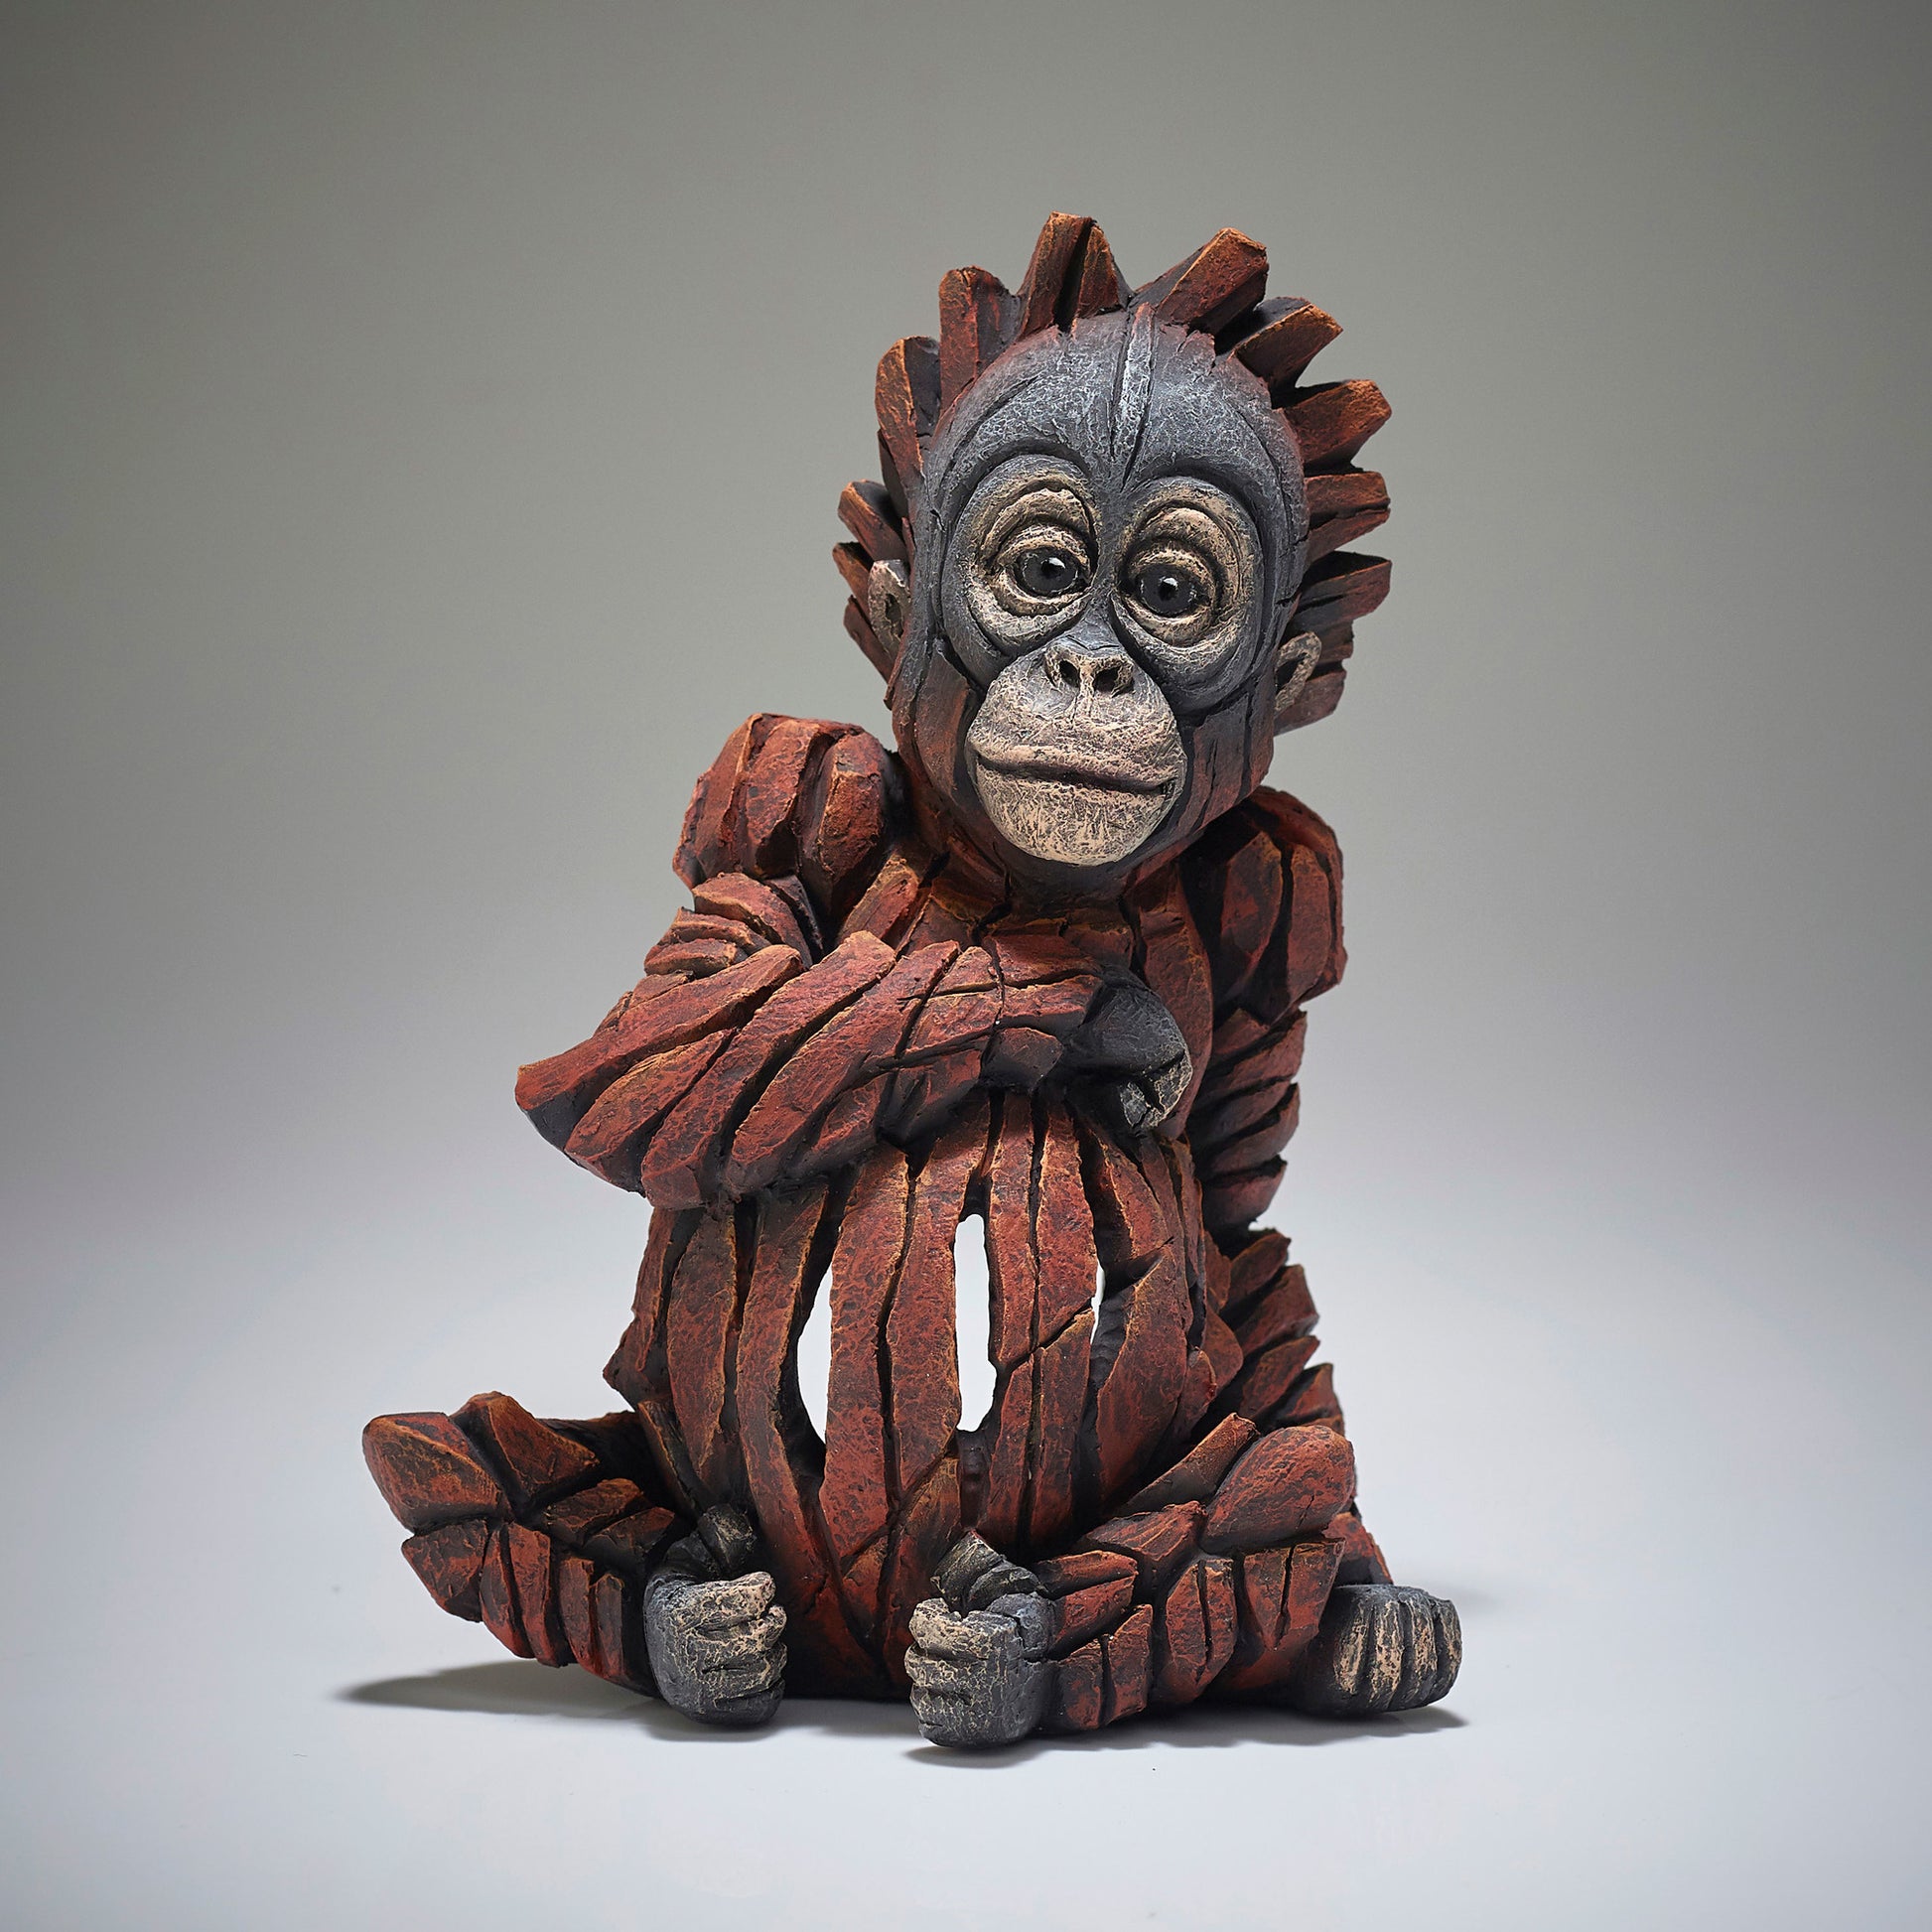 Orangutan Baby Statue, Orangutan Sculpture, Edge Sculpture Sets, Unique Gift